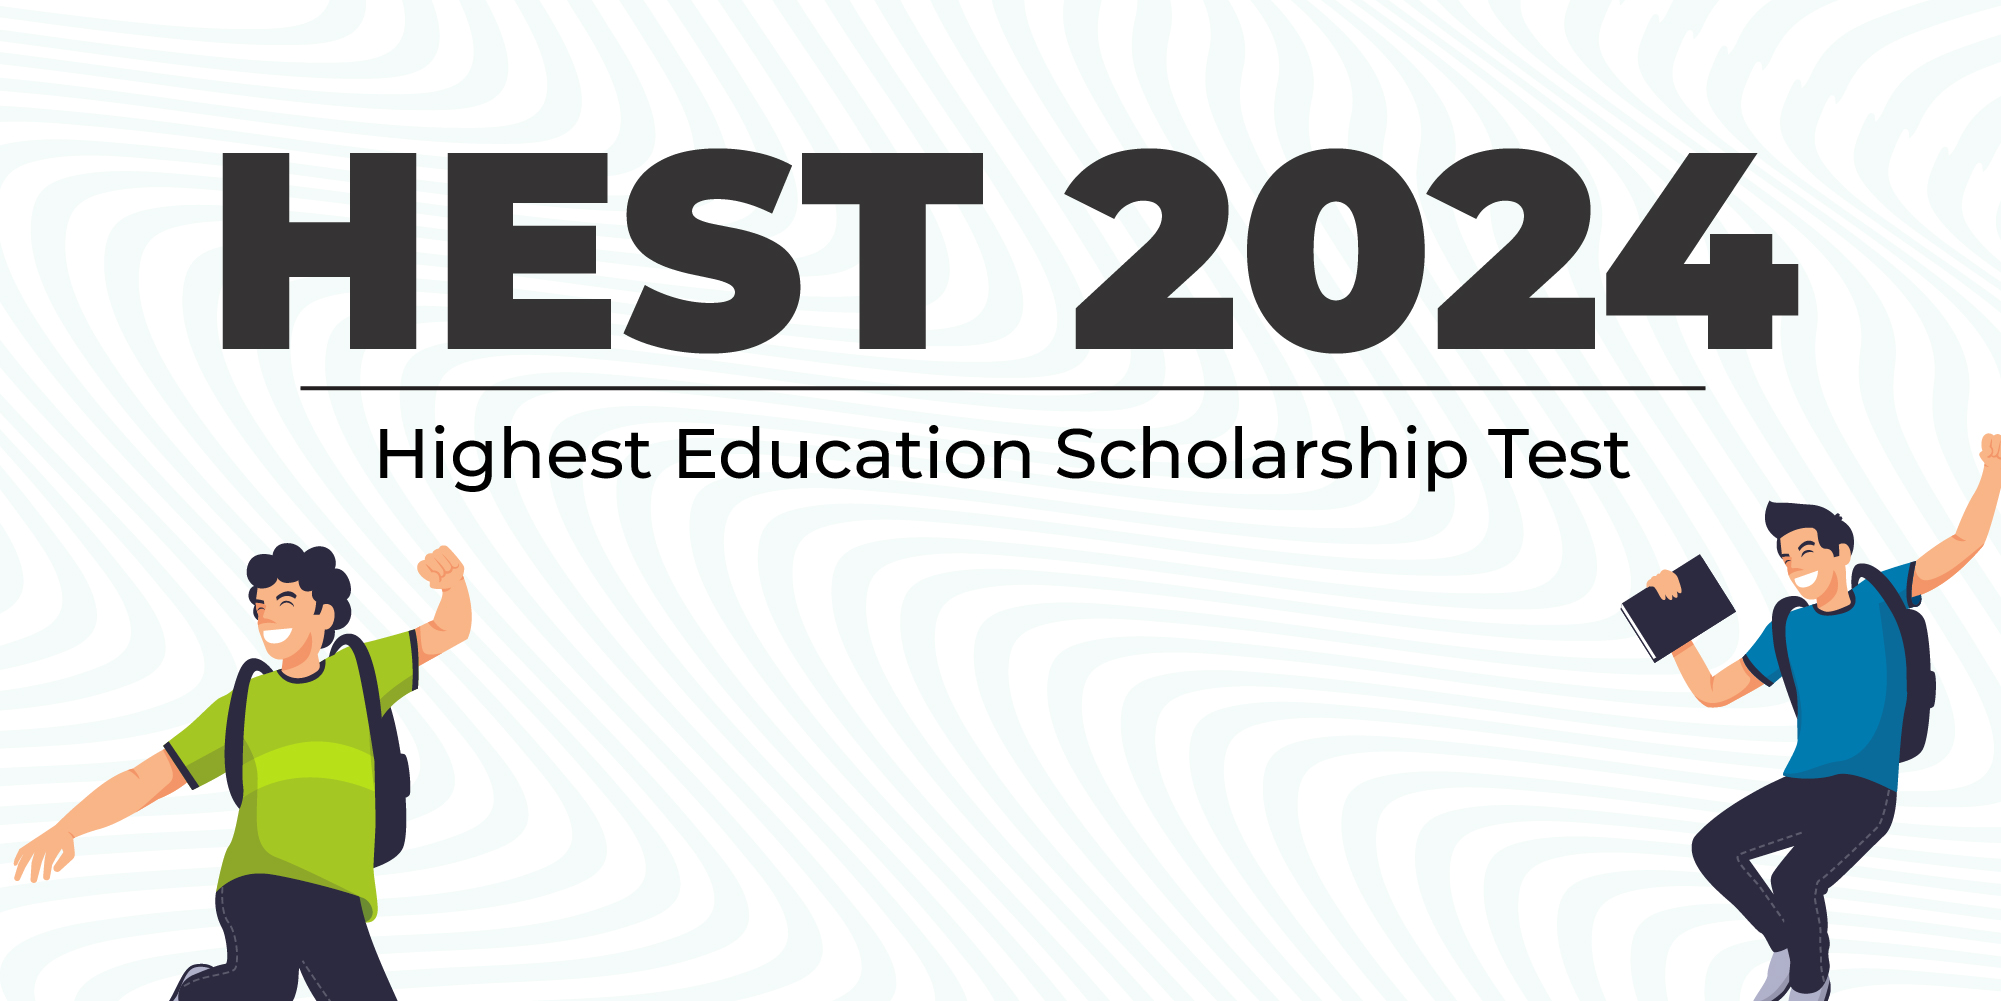 HEST 2024 - India's Largest Higher Education Scholarship Test